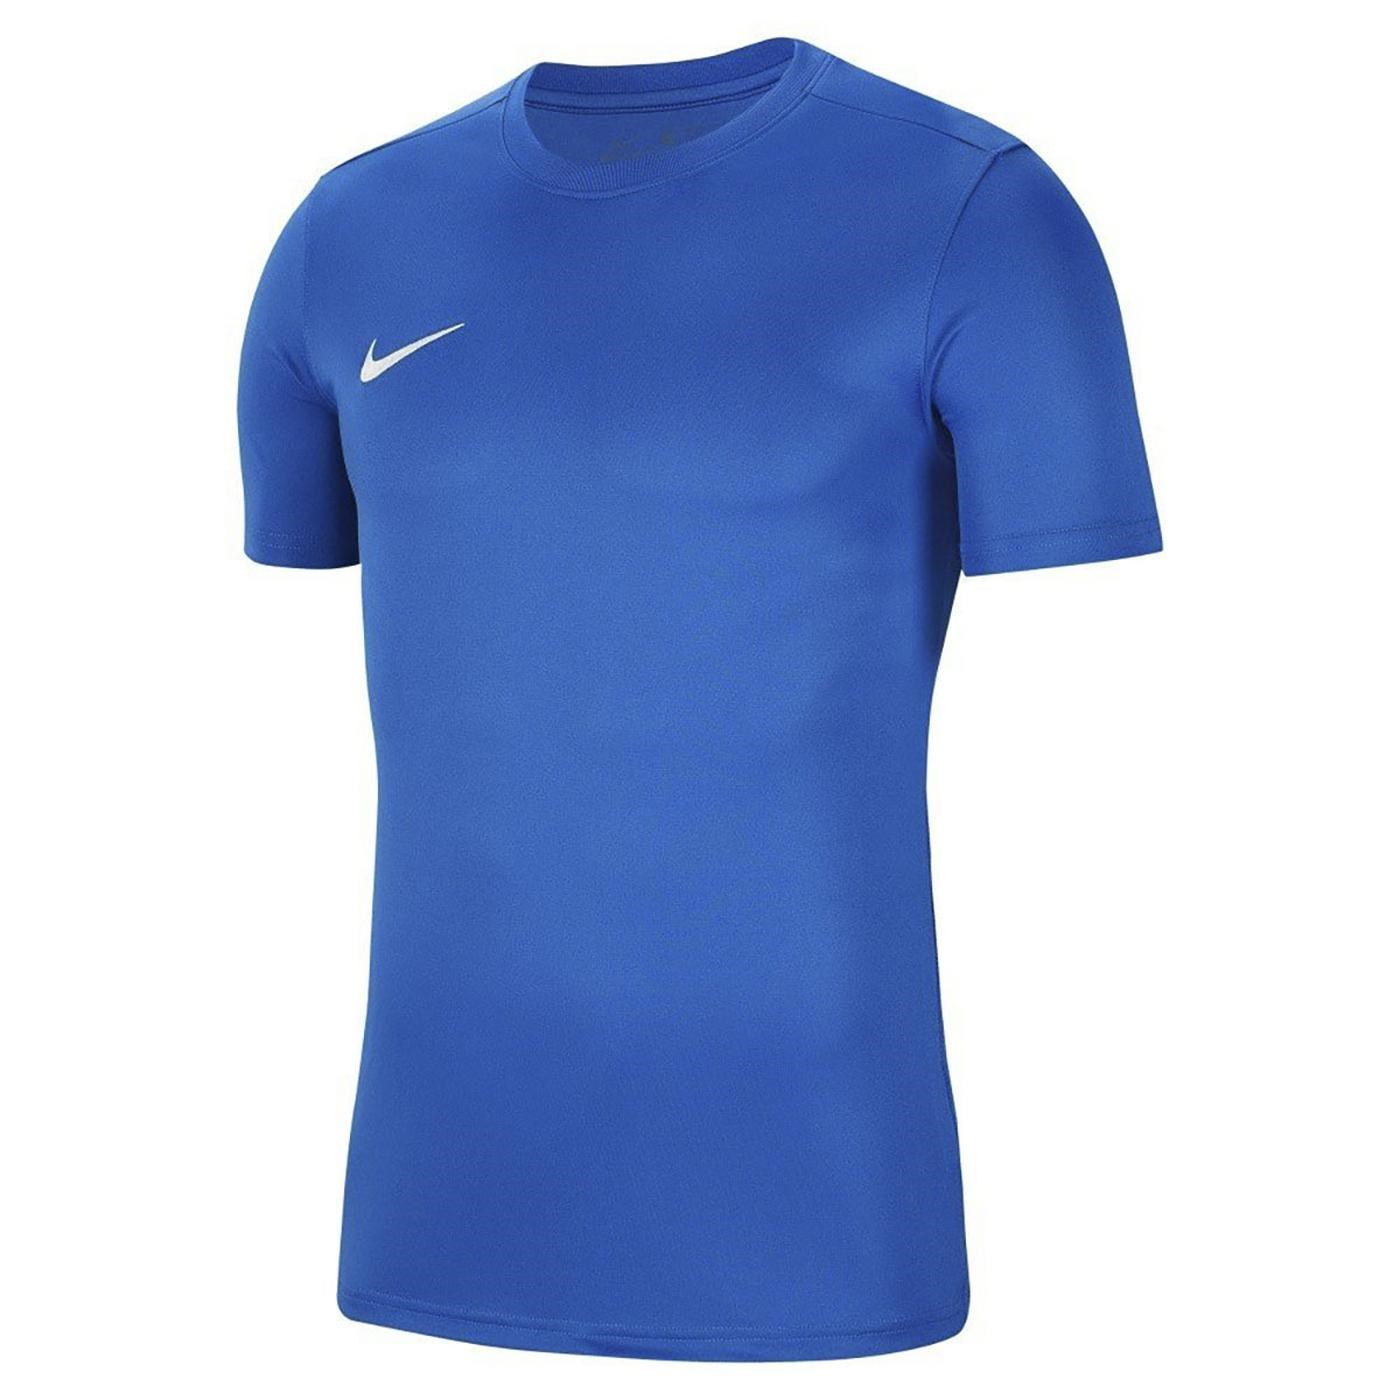 Nike M Nk Dry Park Vıı Jsy Ss Erkek T-shirt Royal Blue - White